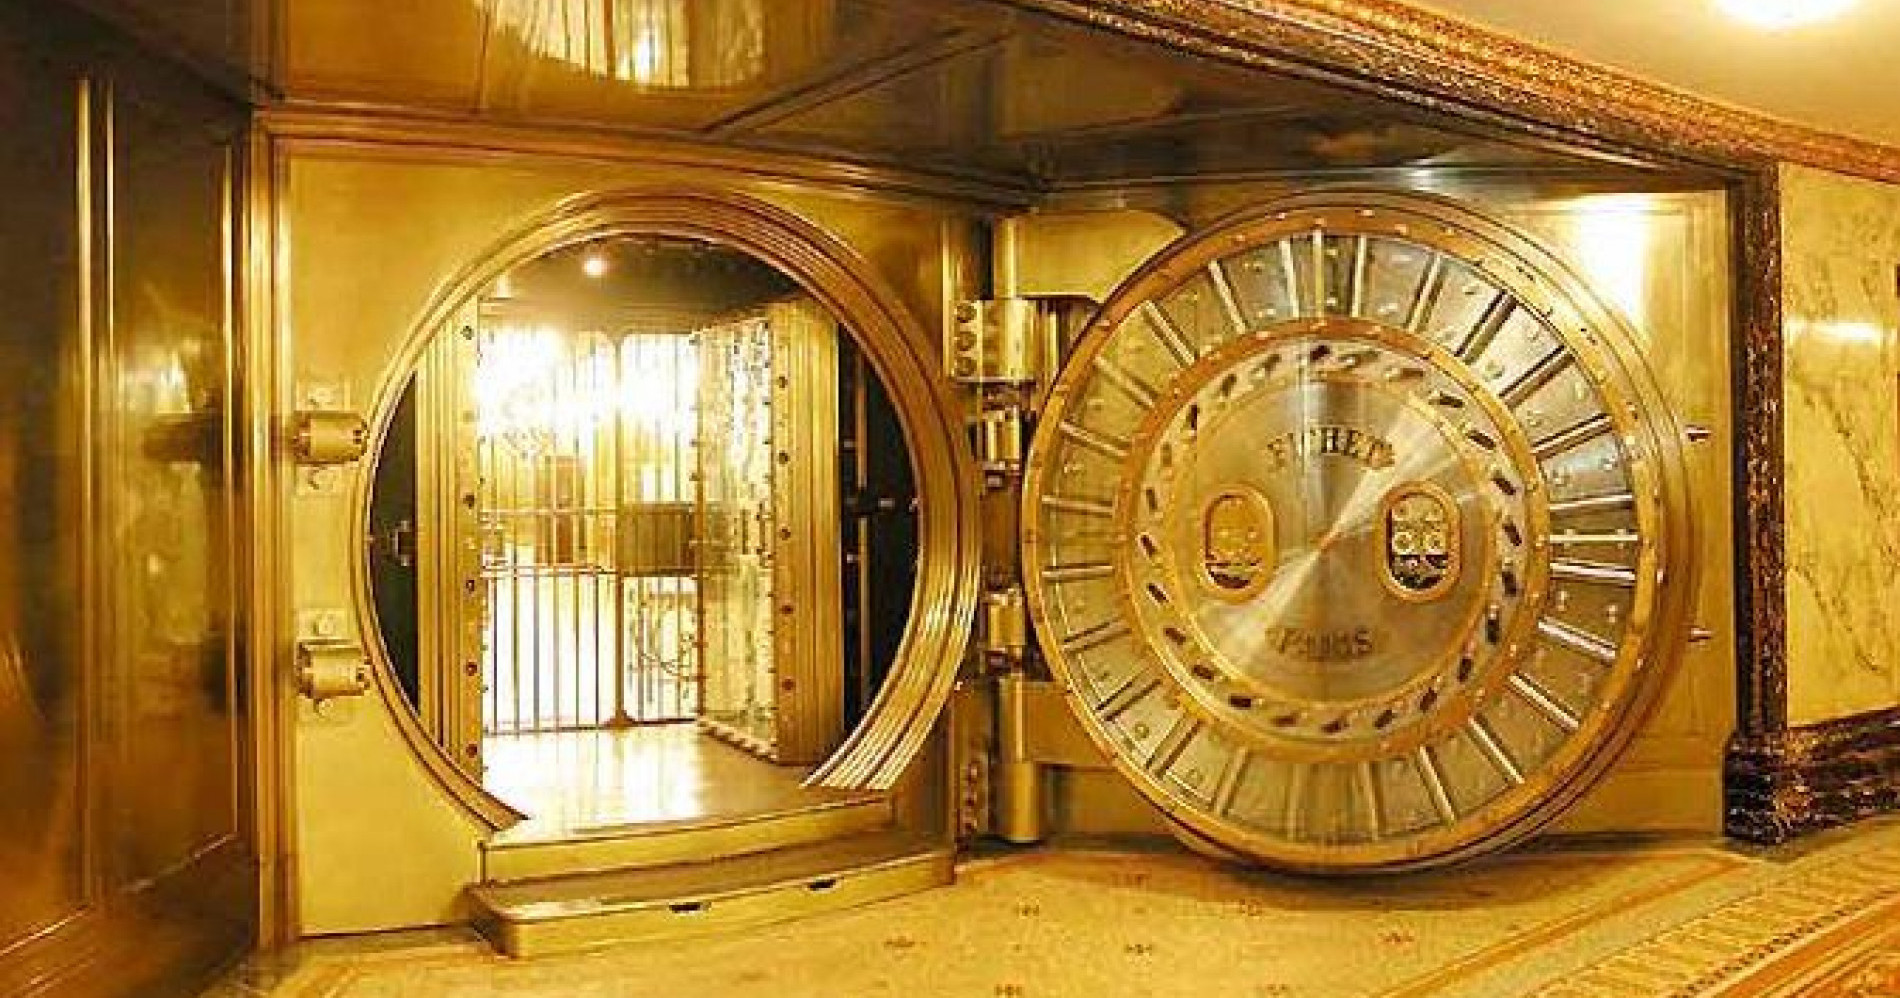 Dengan adanya Bullion Bank, investasi emas menjadi semakin mudah, aman, dan menguntungkan (Sumber Gambar: Pinterest)